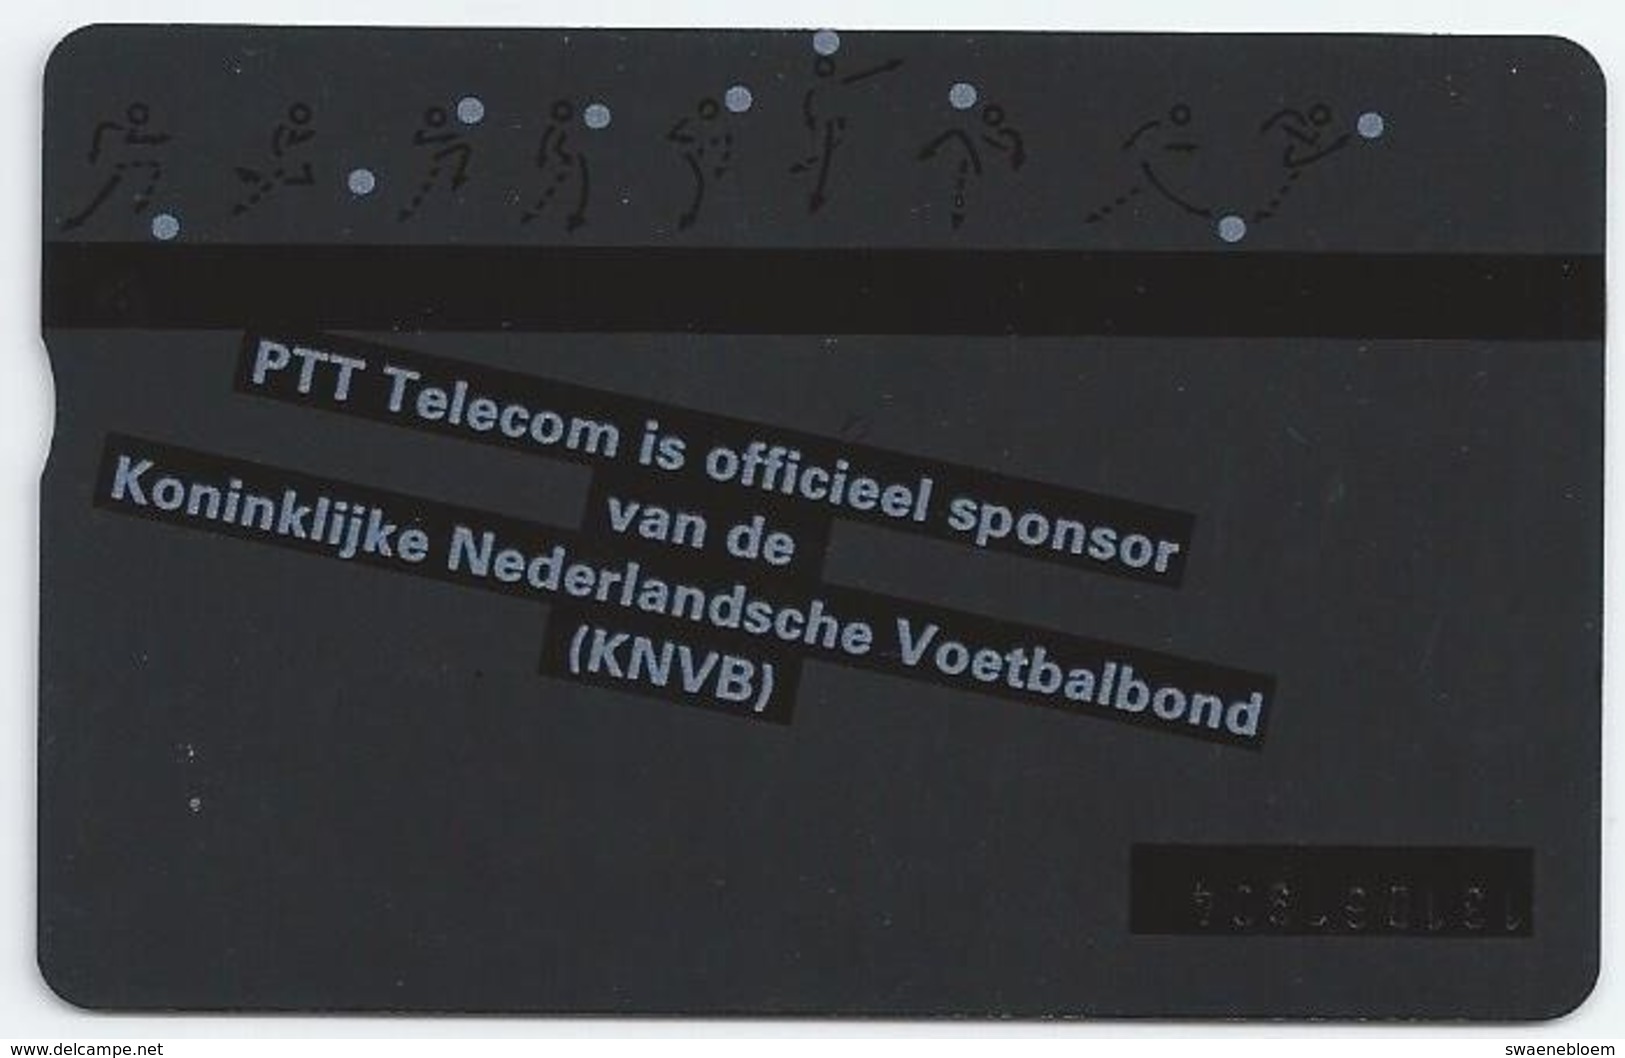 Telefoonkaart.- Nederland. PTT Telecom Cup. 45 Eenheden. Voetbal. PTT Telecom Sponsor Van De KNVB. 131D61904 - Publiques